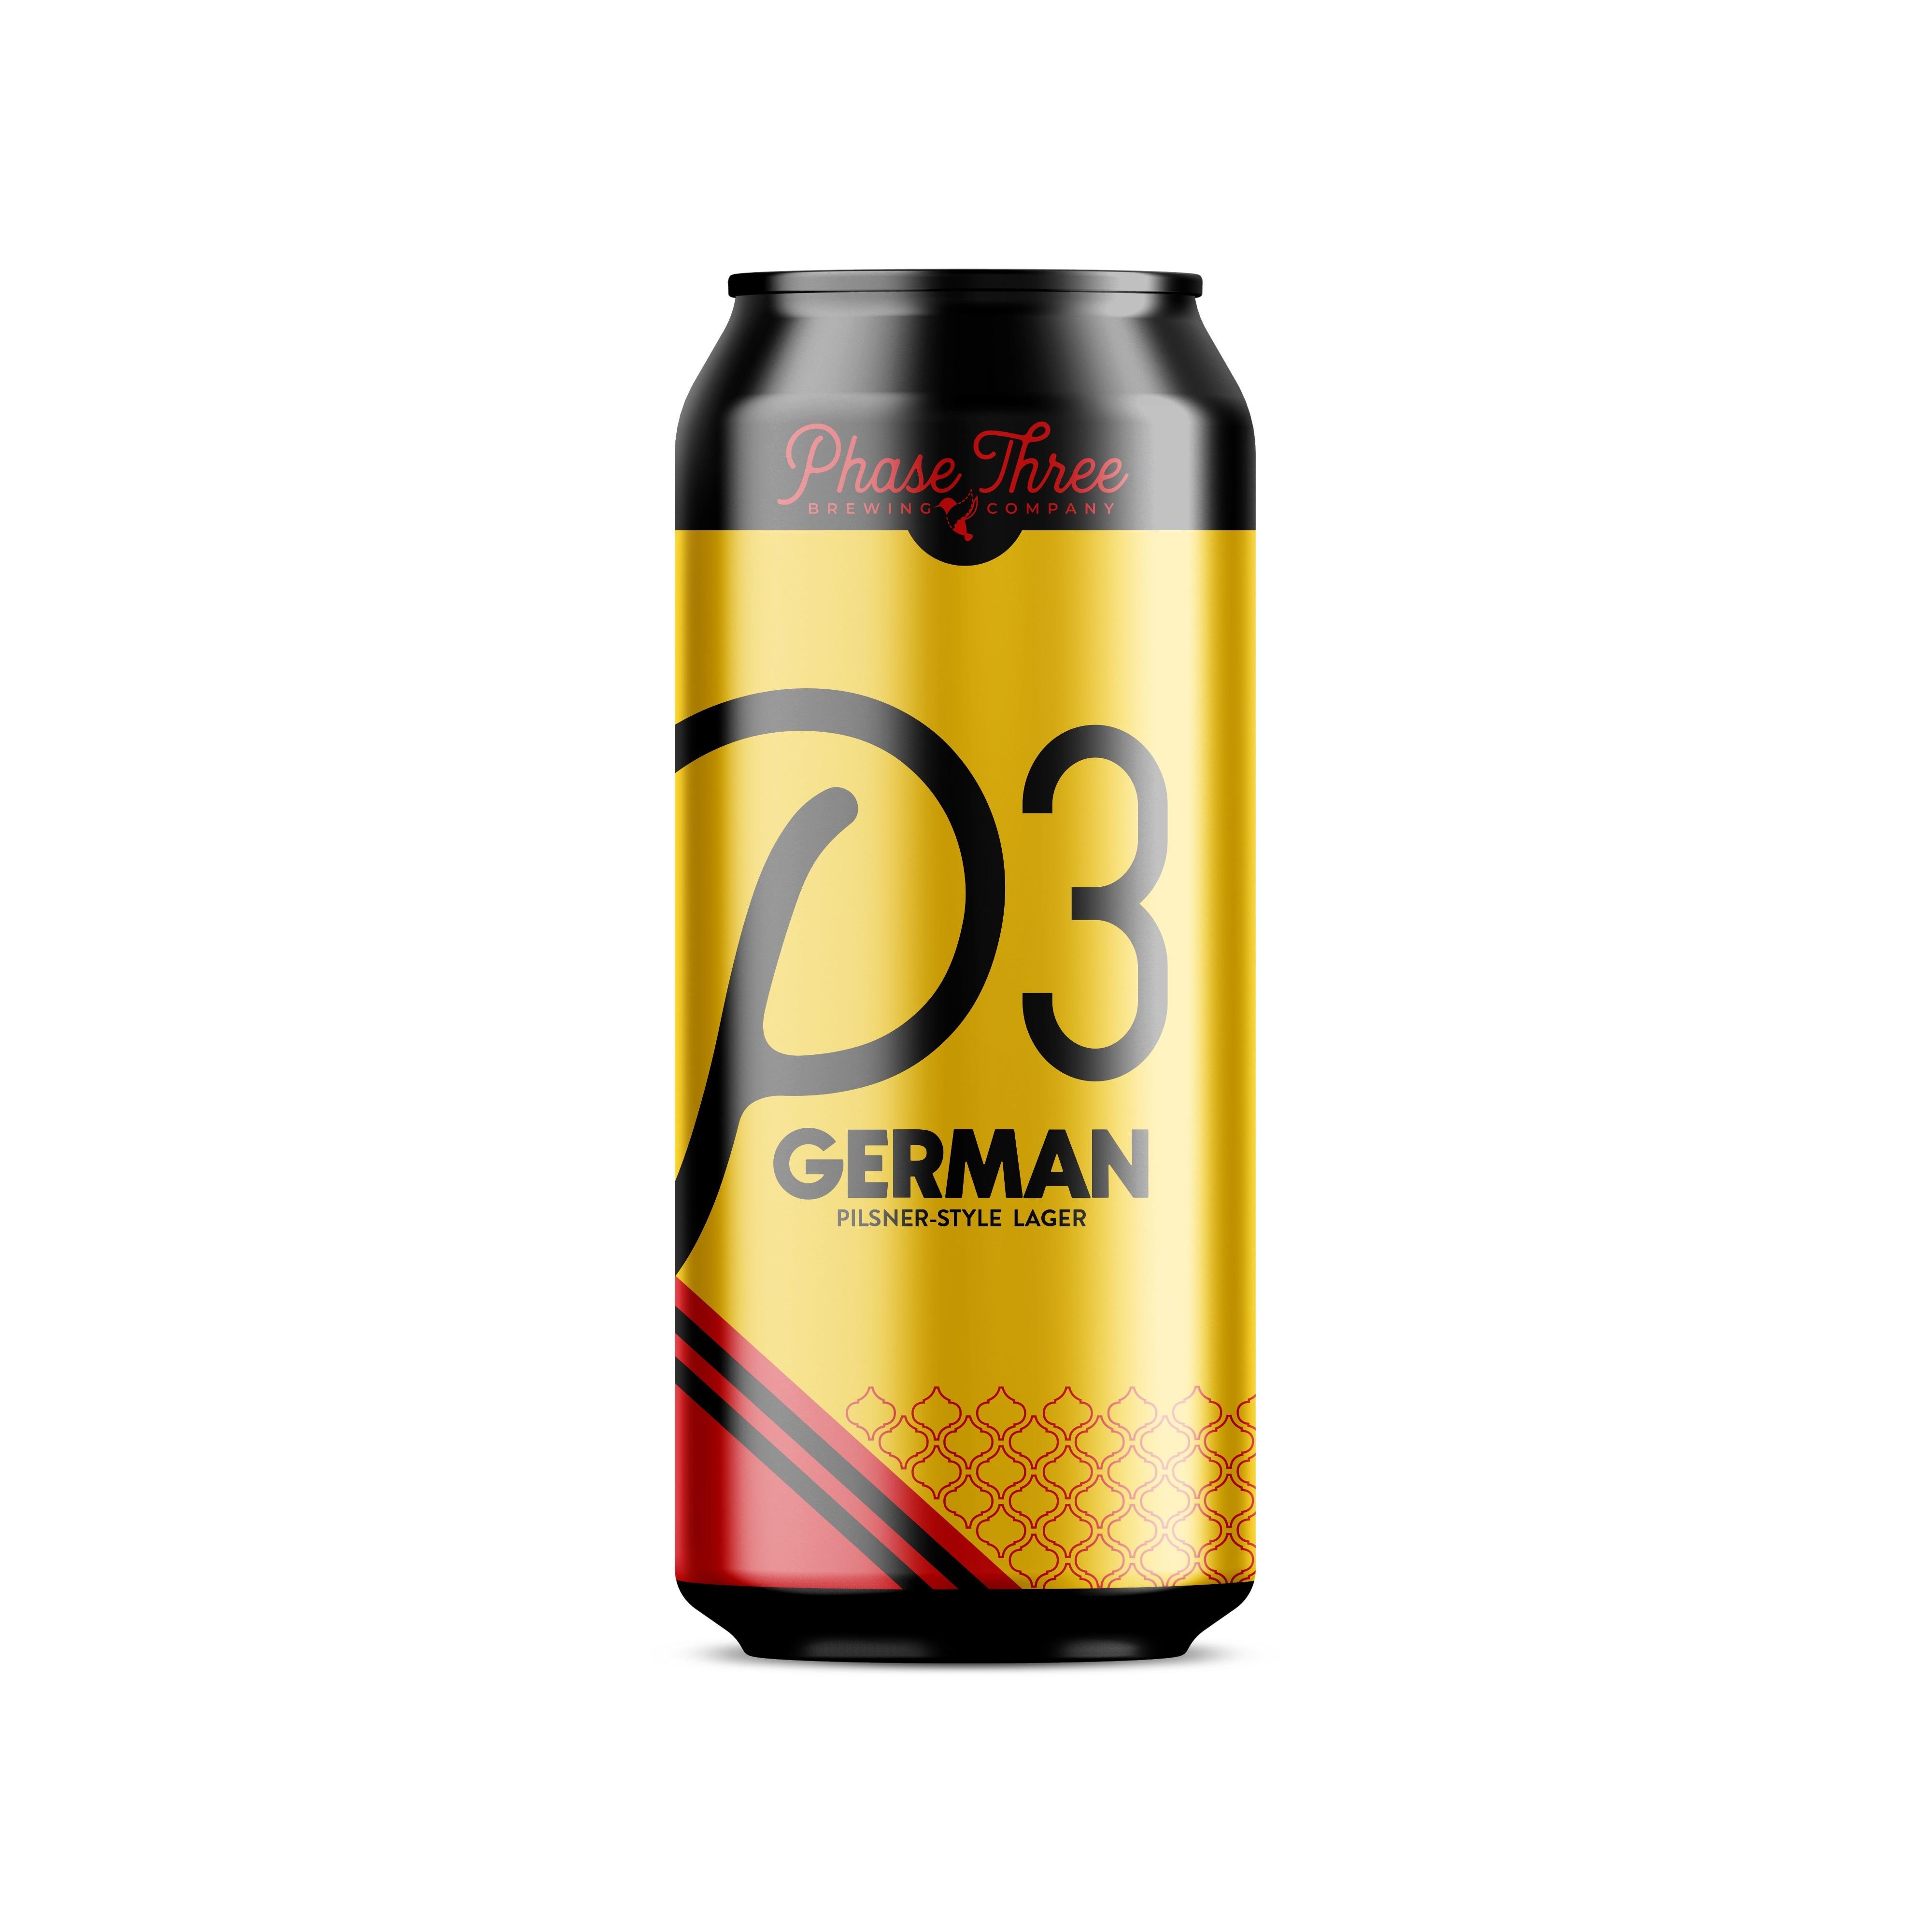 Phase Three - P3 German Pilsner-Style Lager